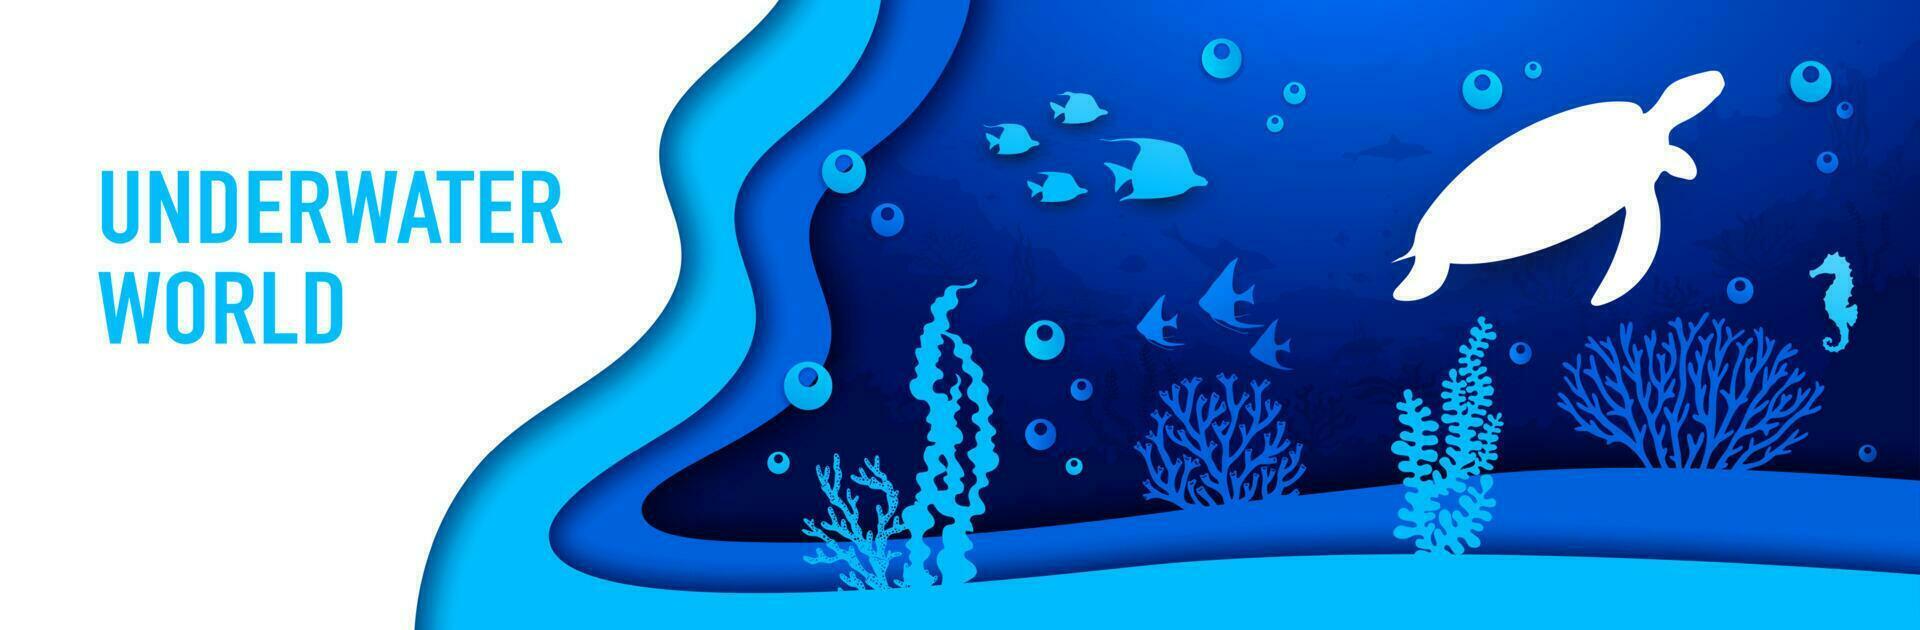 Underwater paper cut landscape, sea turtle, fishes vector